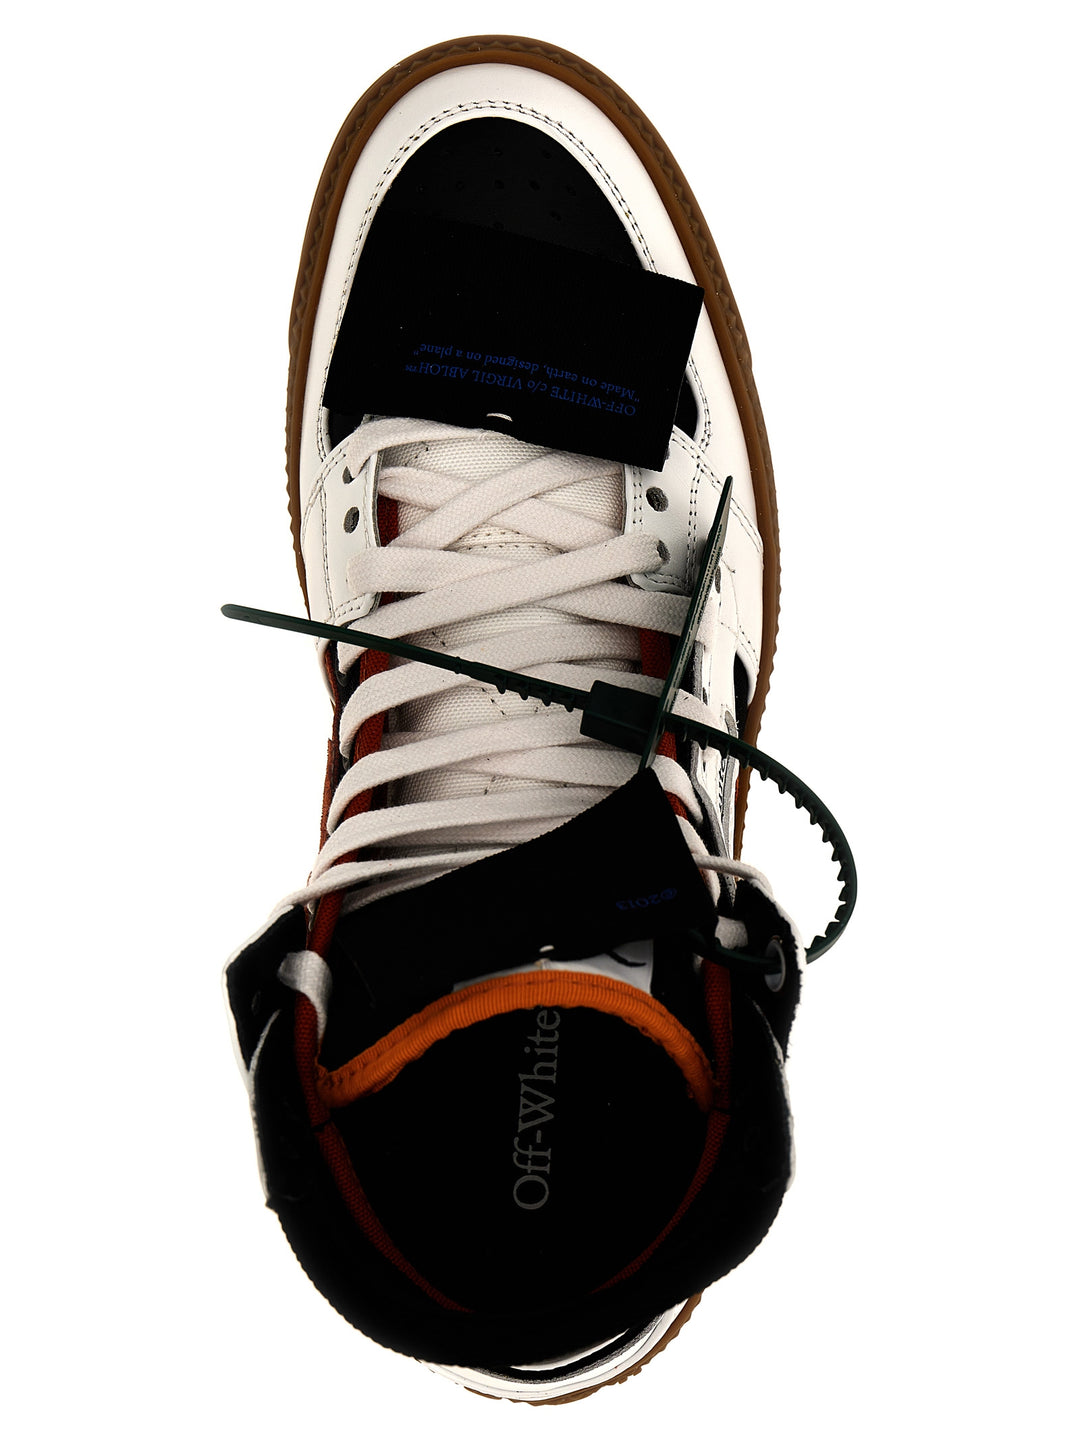 3.0 Off Court Sneakers Bianco/Nero